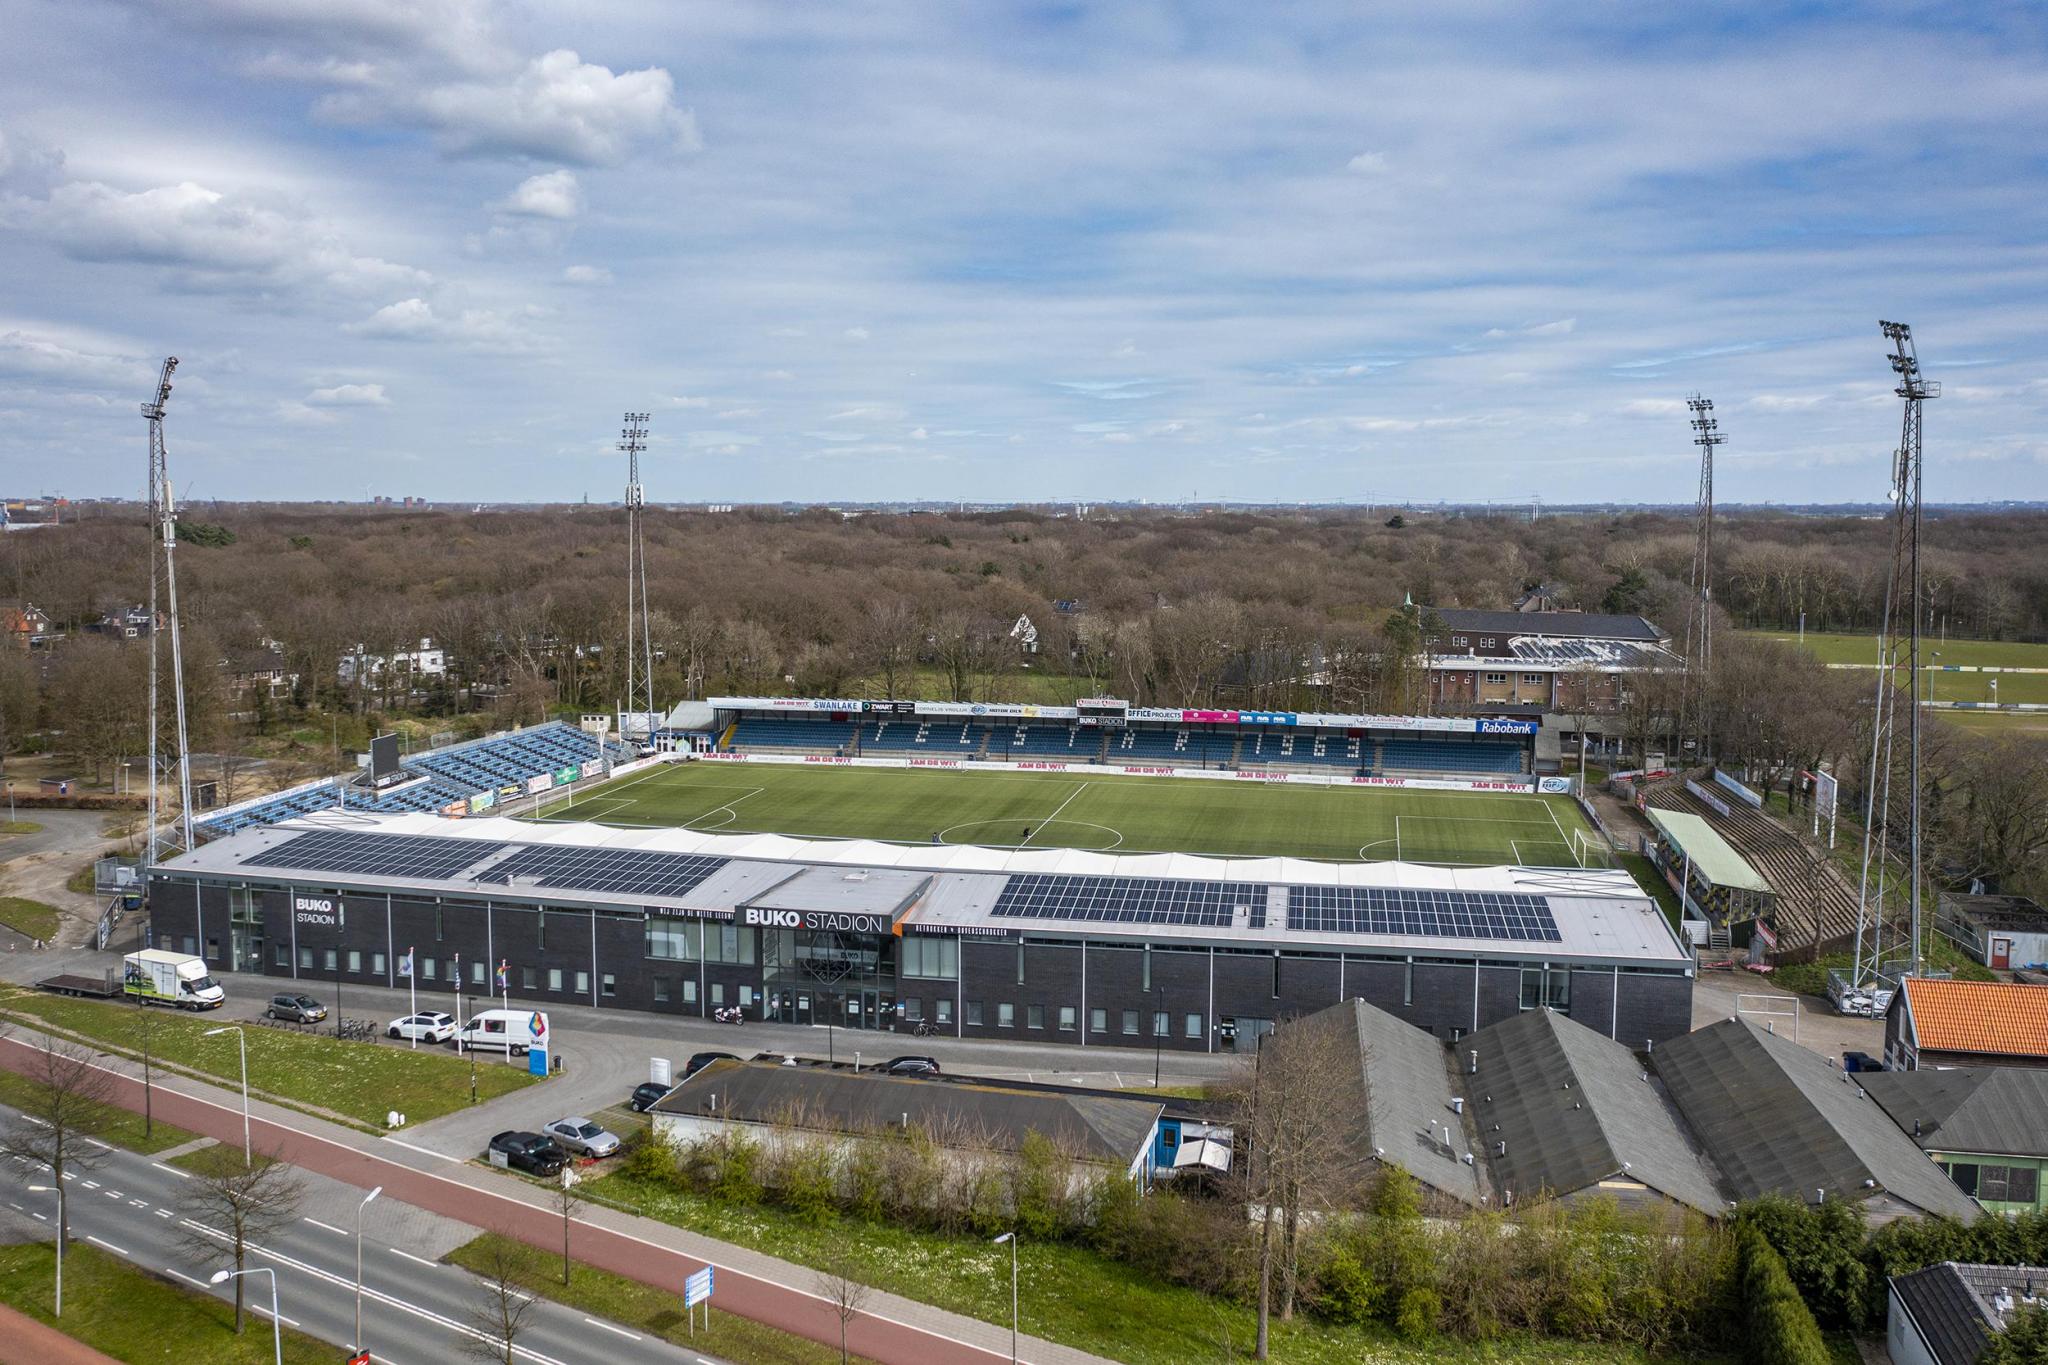 Telstar/Buko stadium IJmuiden